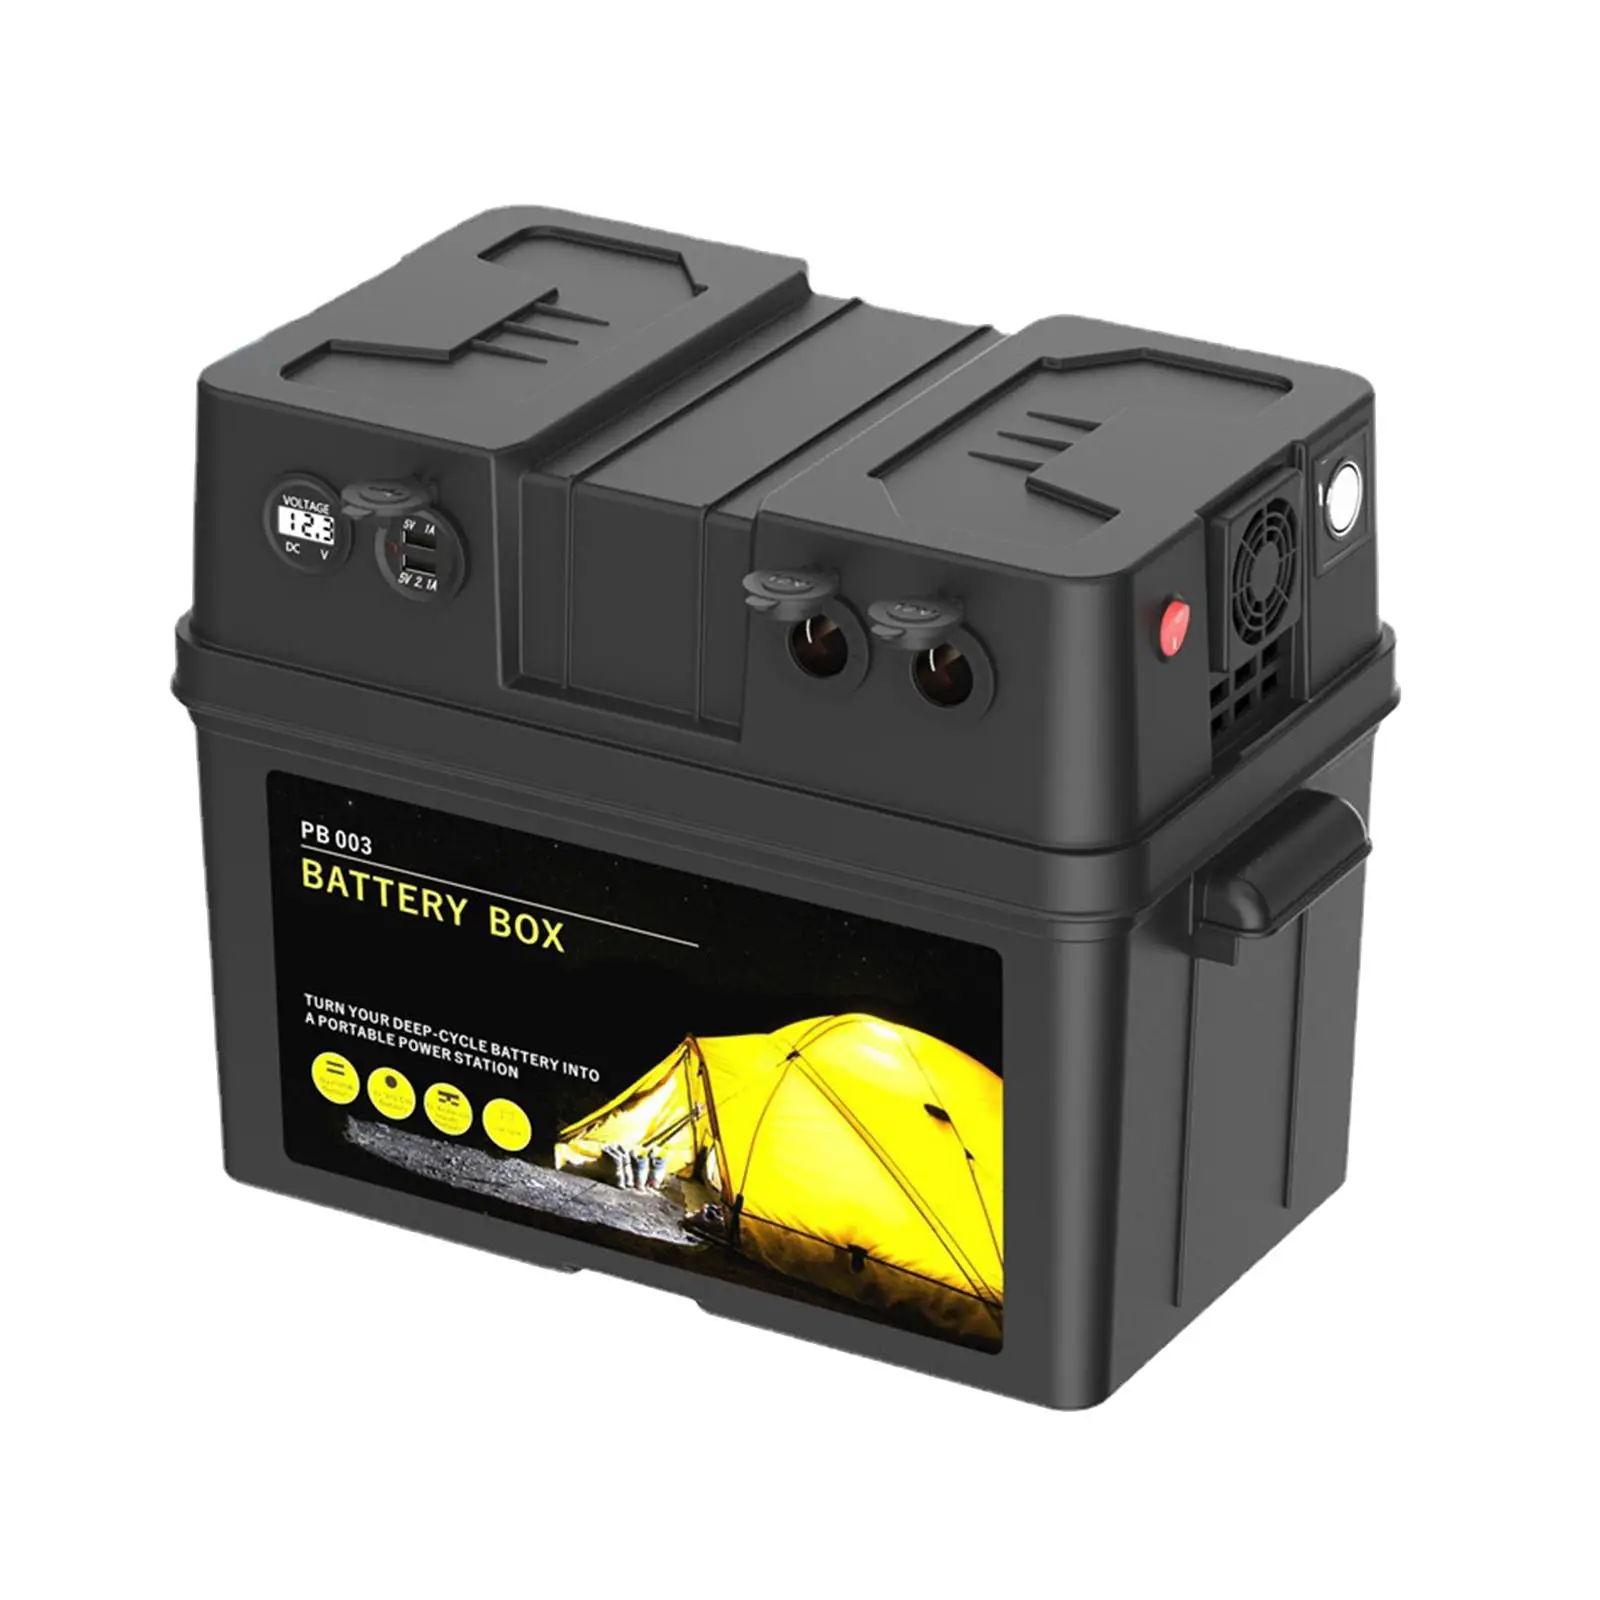 Trolling Motor Battery Box Dual USB Ports Heavy Duty Multifunction 12 V RV Battery Box for SUV Car Solar Camping Travel